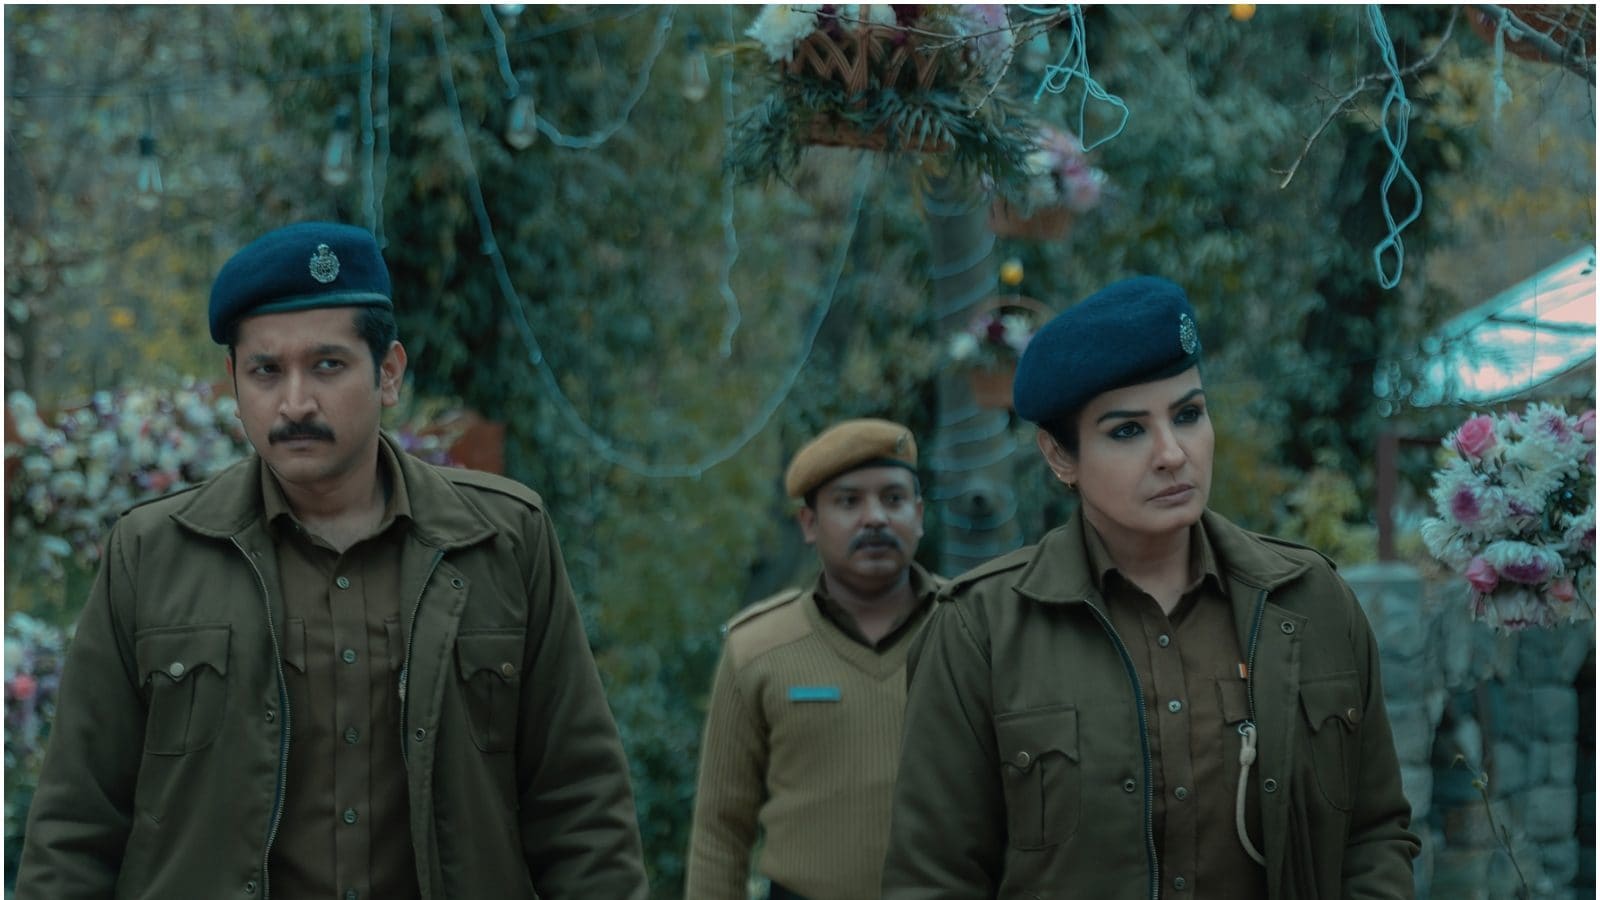 Raveena Tandon and Parambrata Chatterjee Saddled with Sloppy Script in Netflix Series